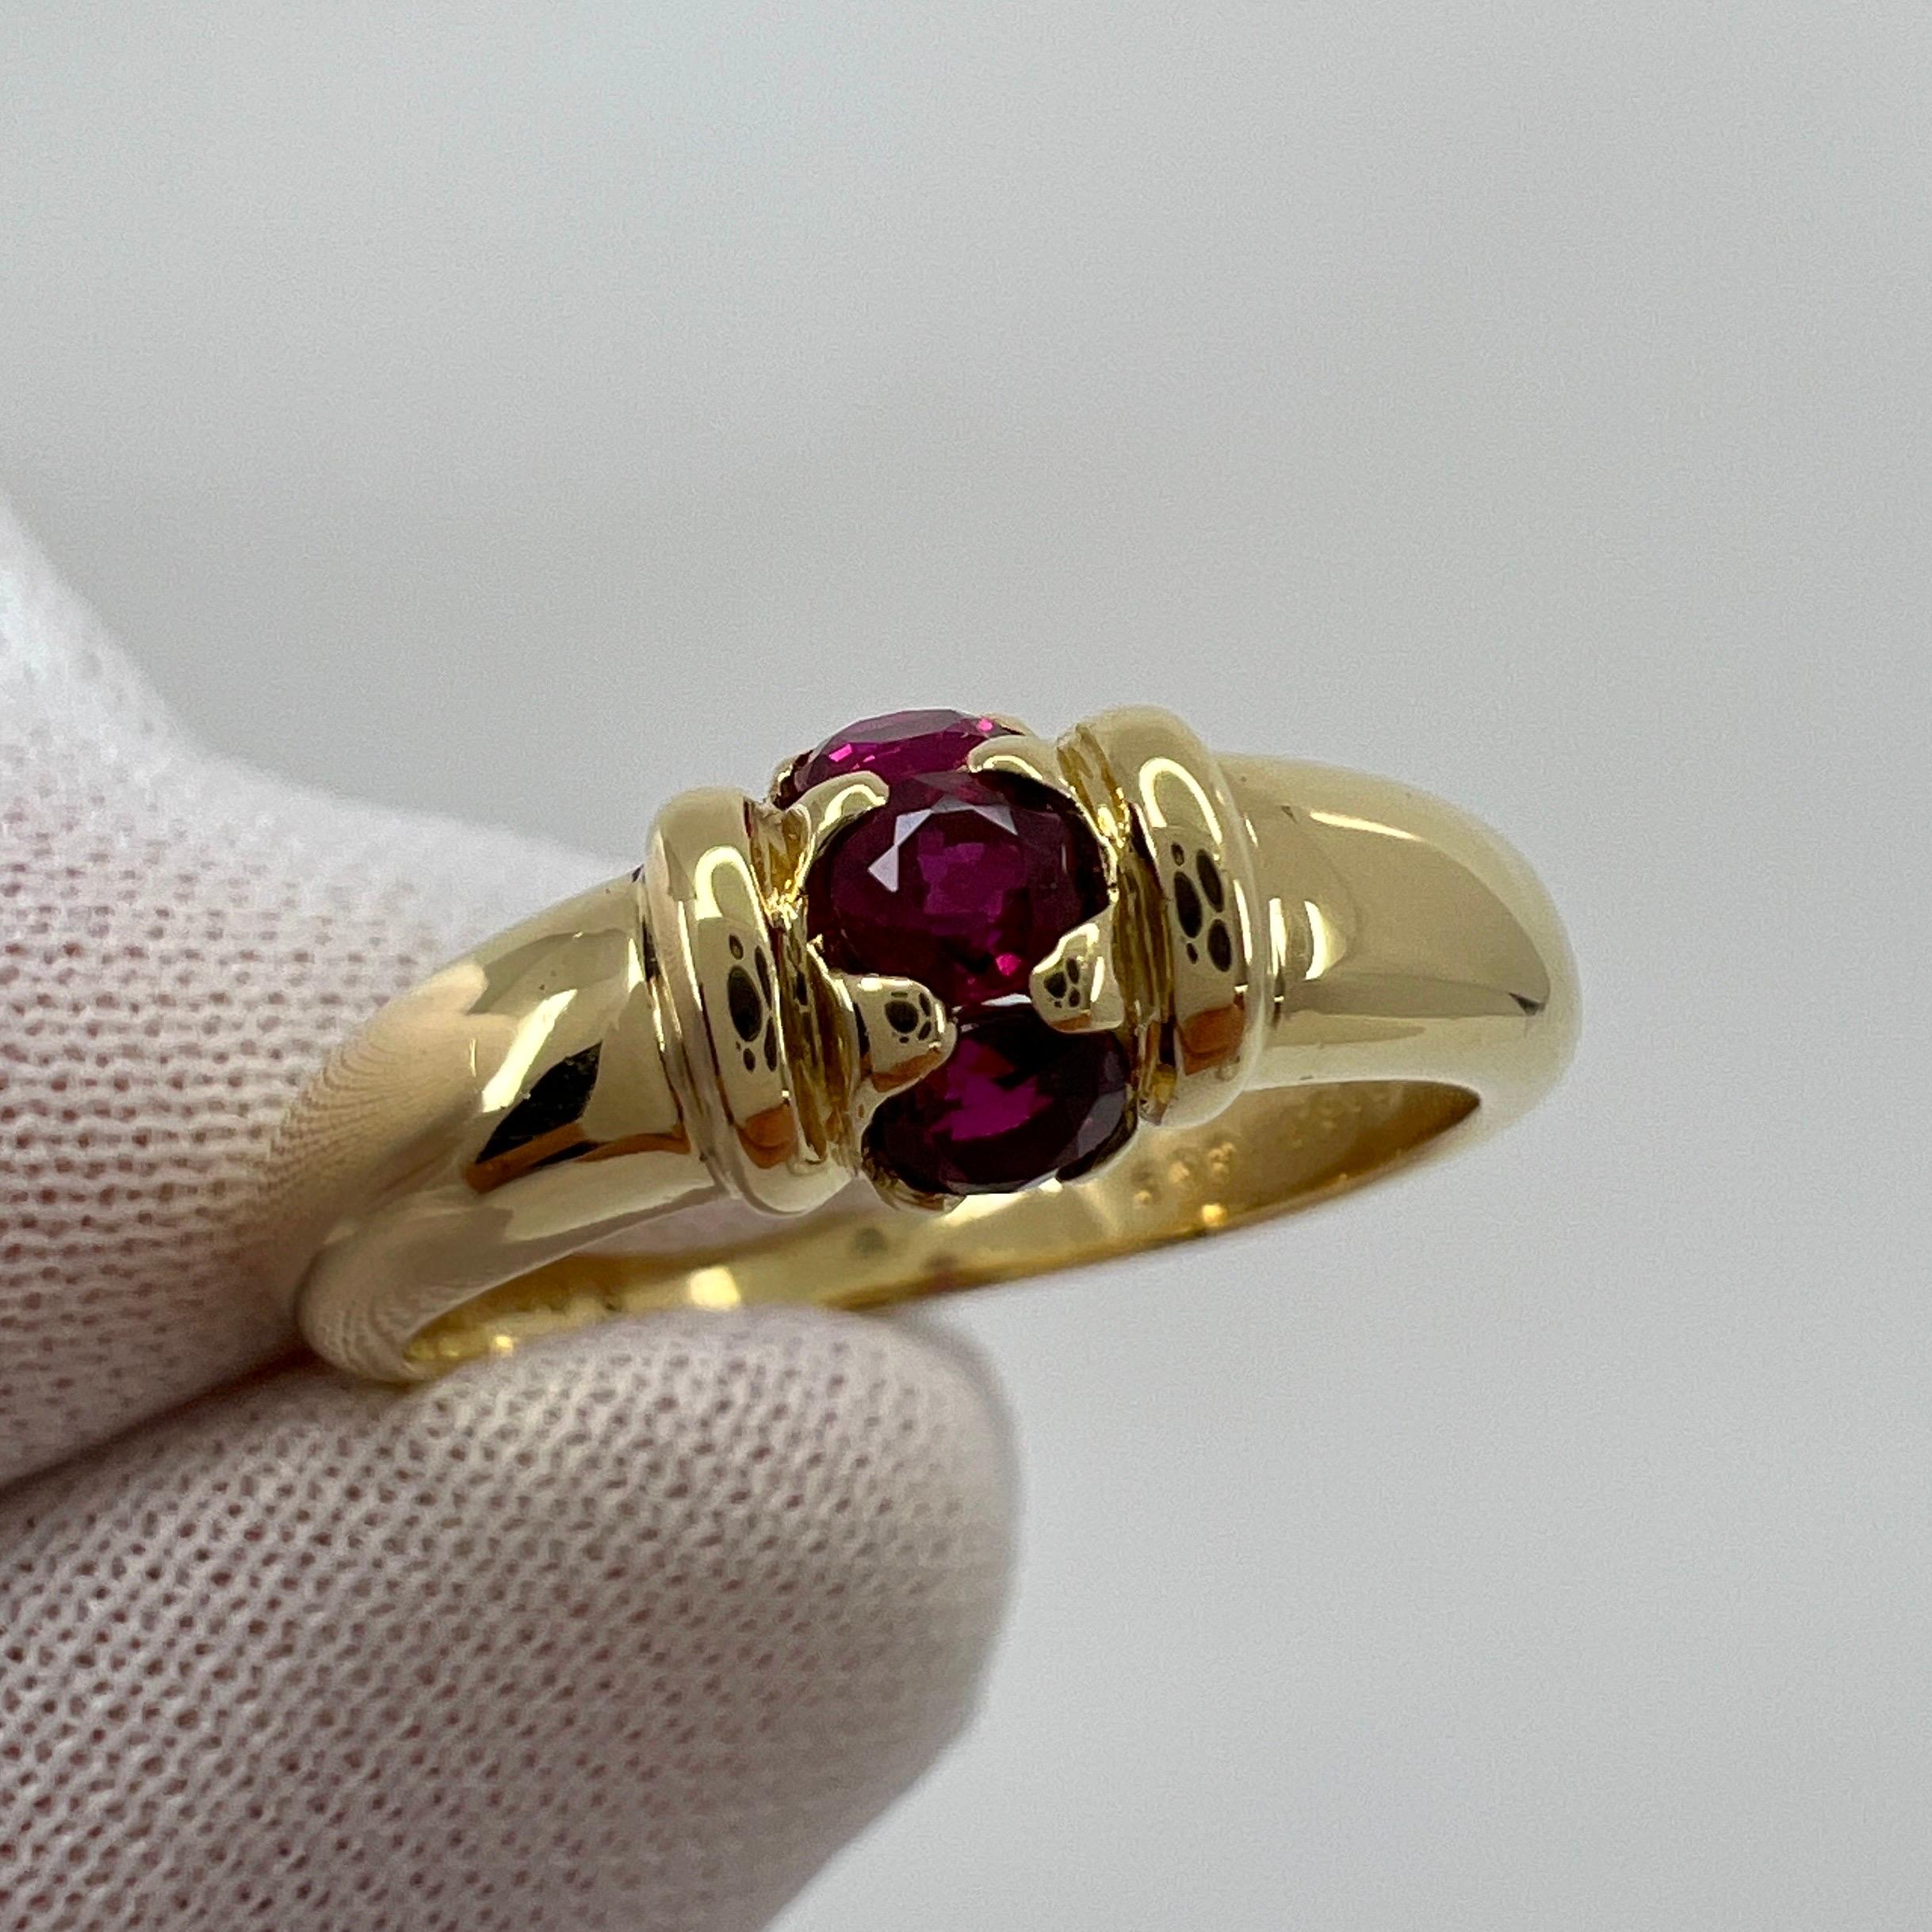 Round Cut Rare Vintage Van Cleef & Arpels Vivid Red Ruby Three Stone 18k Yellow Gold Ring